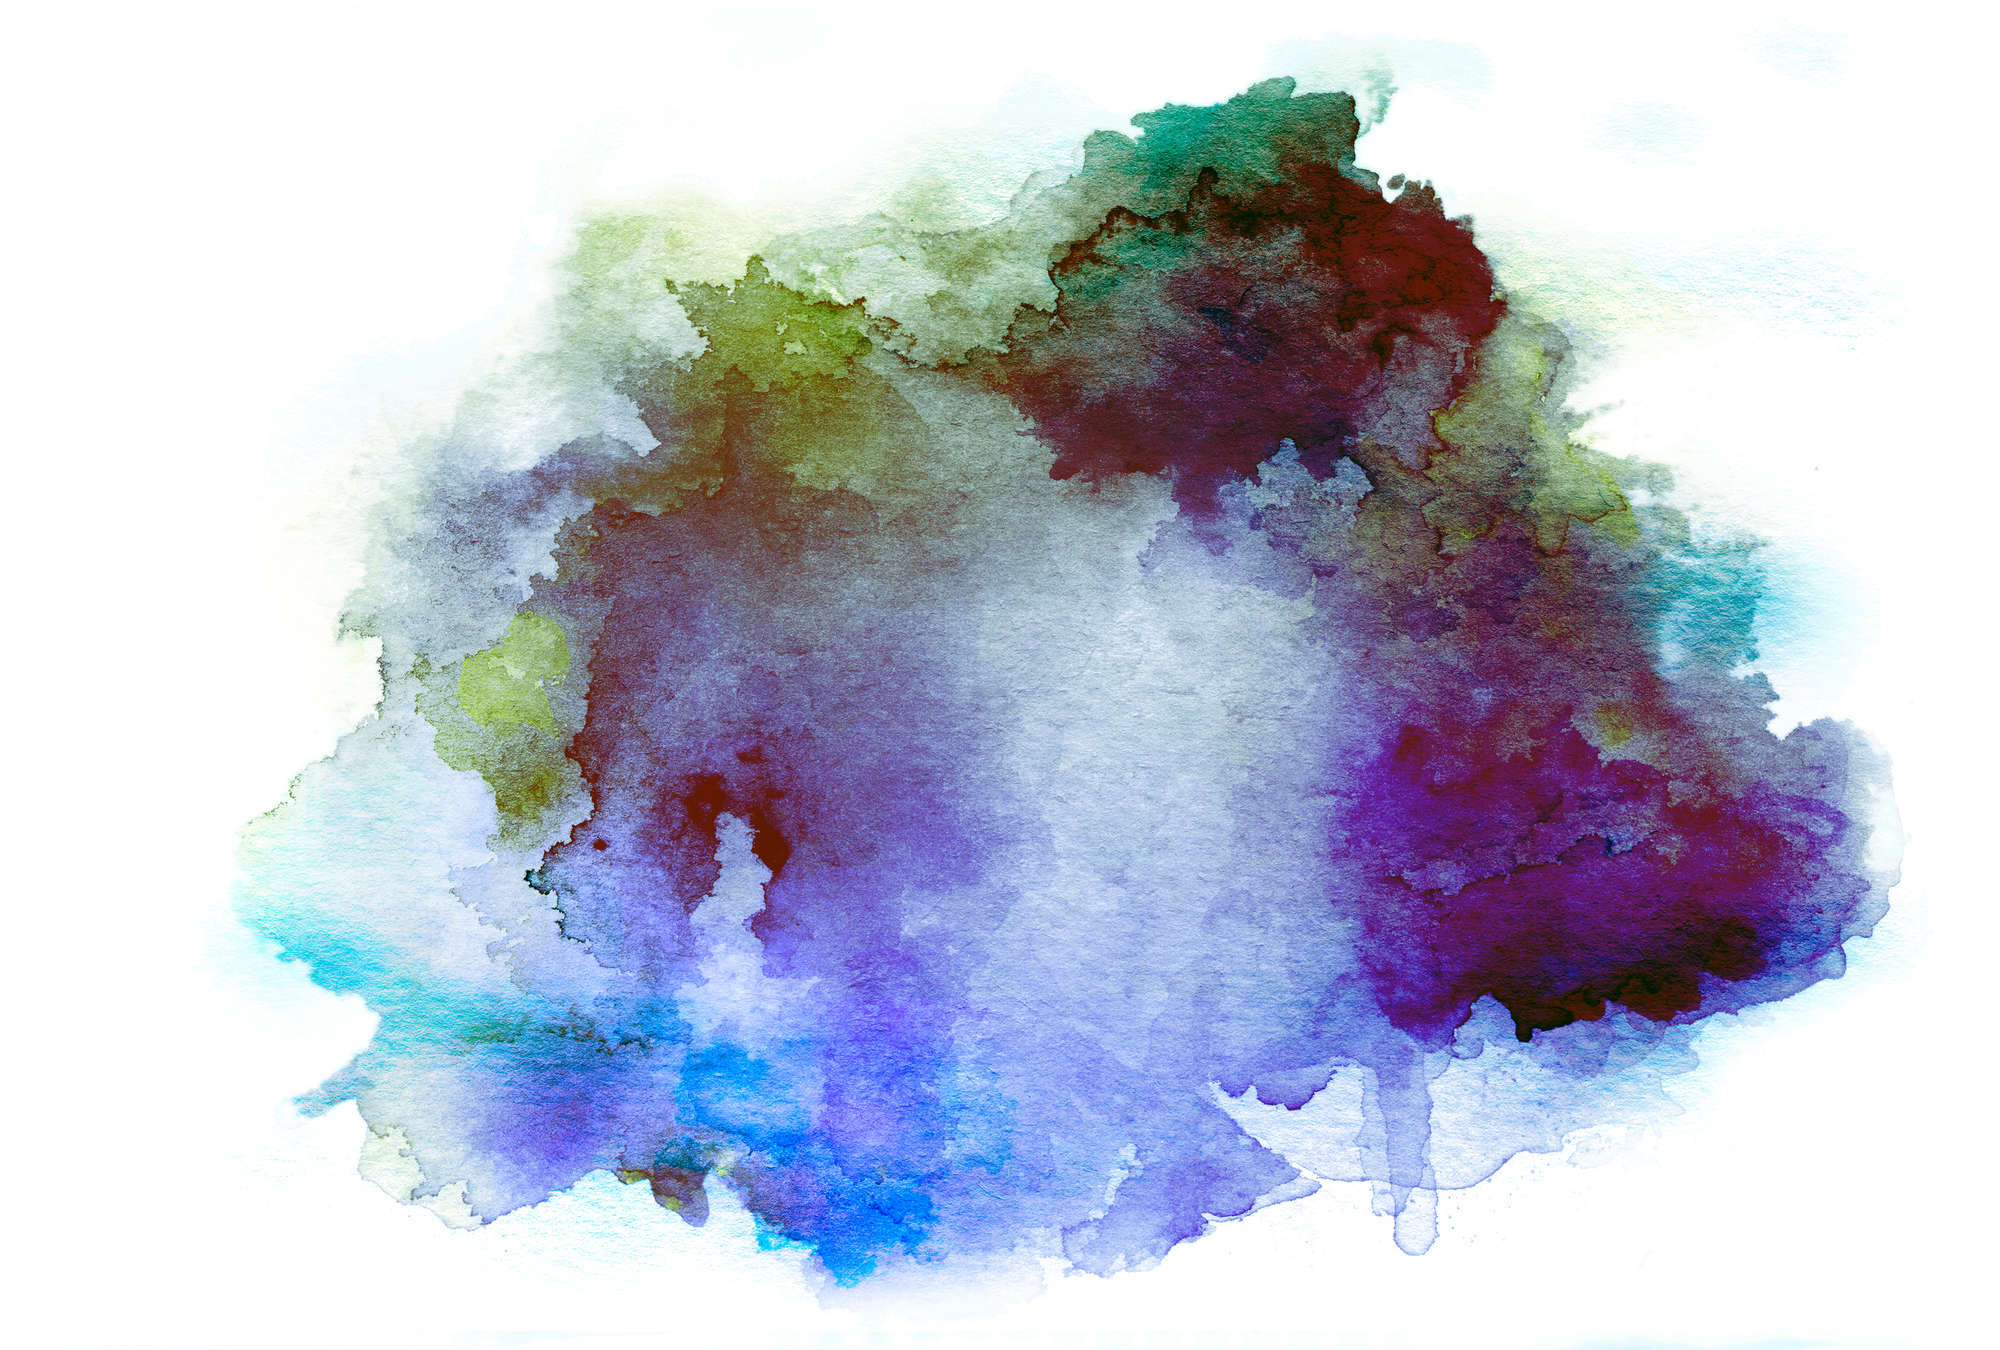             Papel Pintado Acuarela Mancha de Tinta, Gris Azul Degradado
        